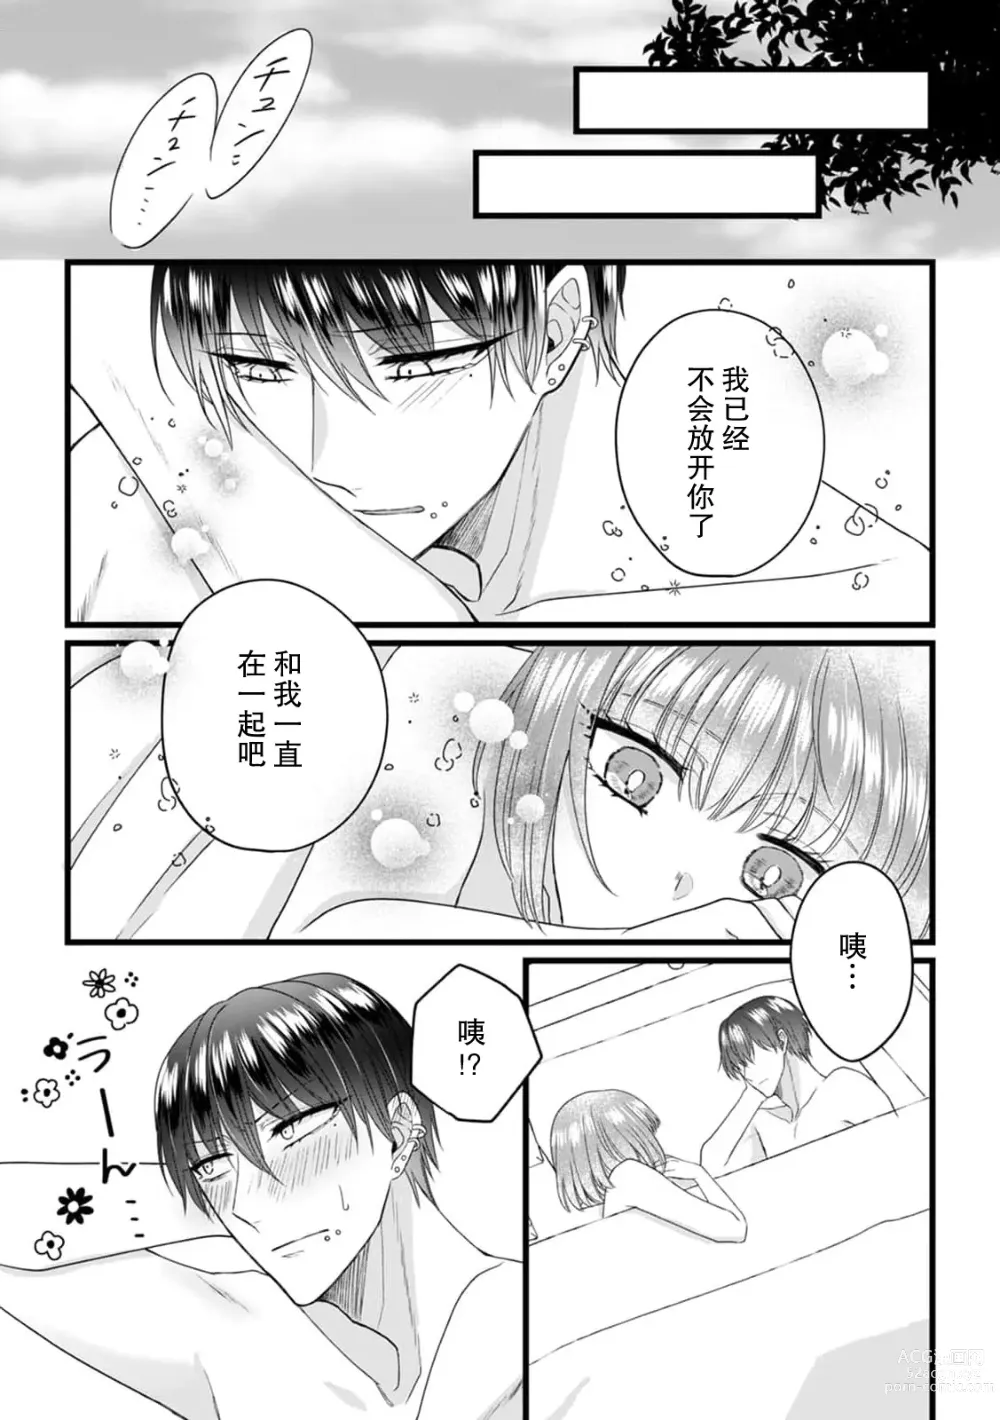 Page 126 of manga 弄湿我的是青梅竹马的男大姐 第一次见到……他认真的雄性一面。 1-5 end